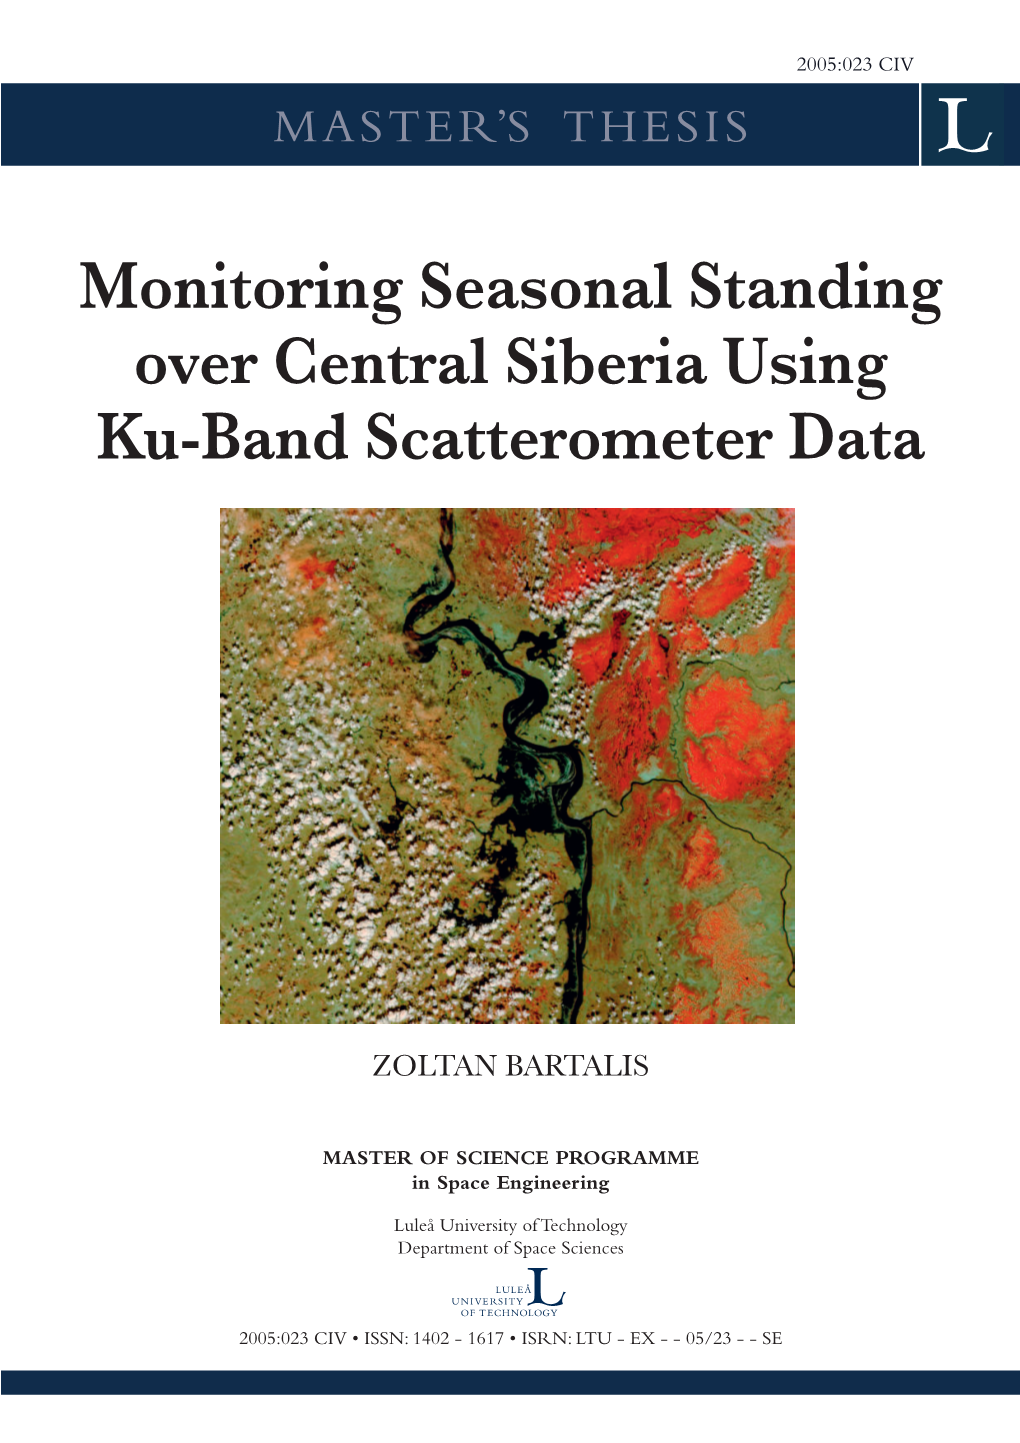 Monitoring Seasonal Standing Water Over Central Siberia Using Ku-Band Scatterometer Data